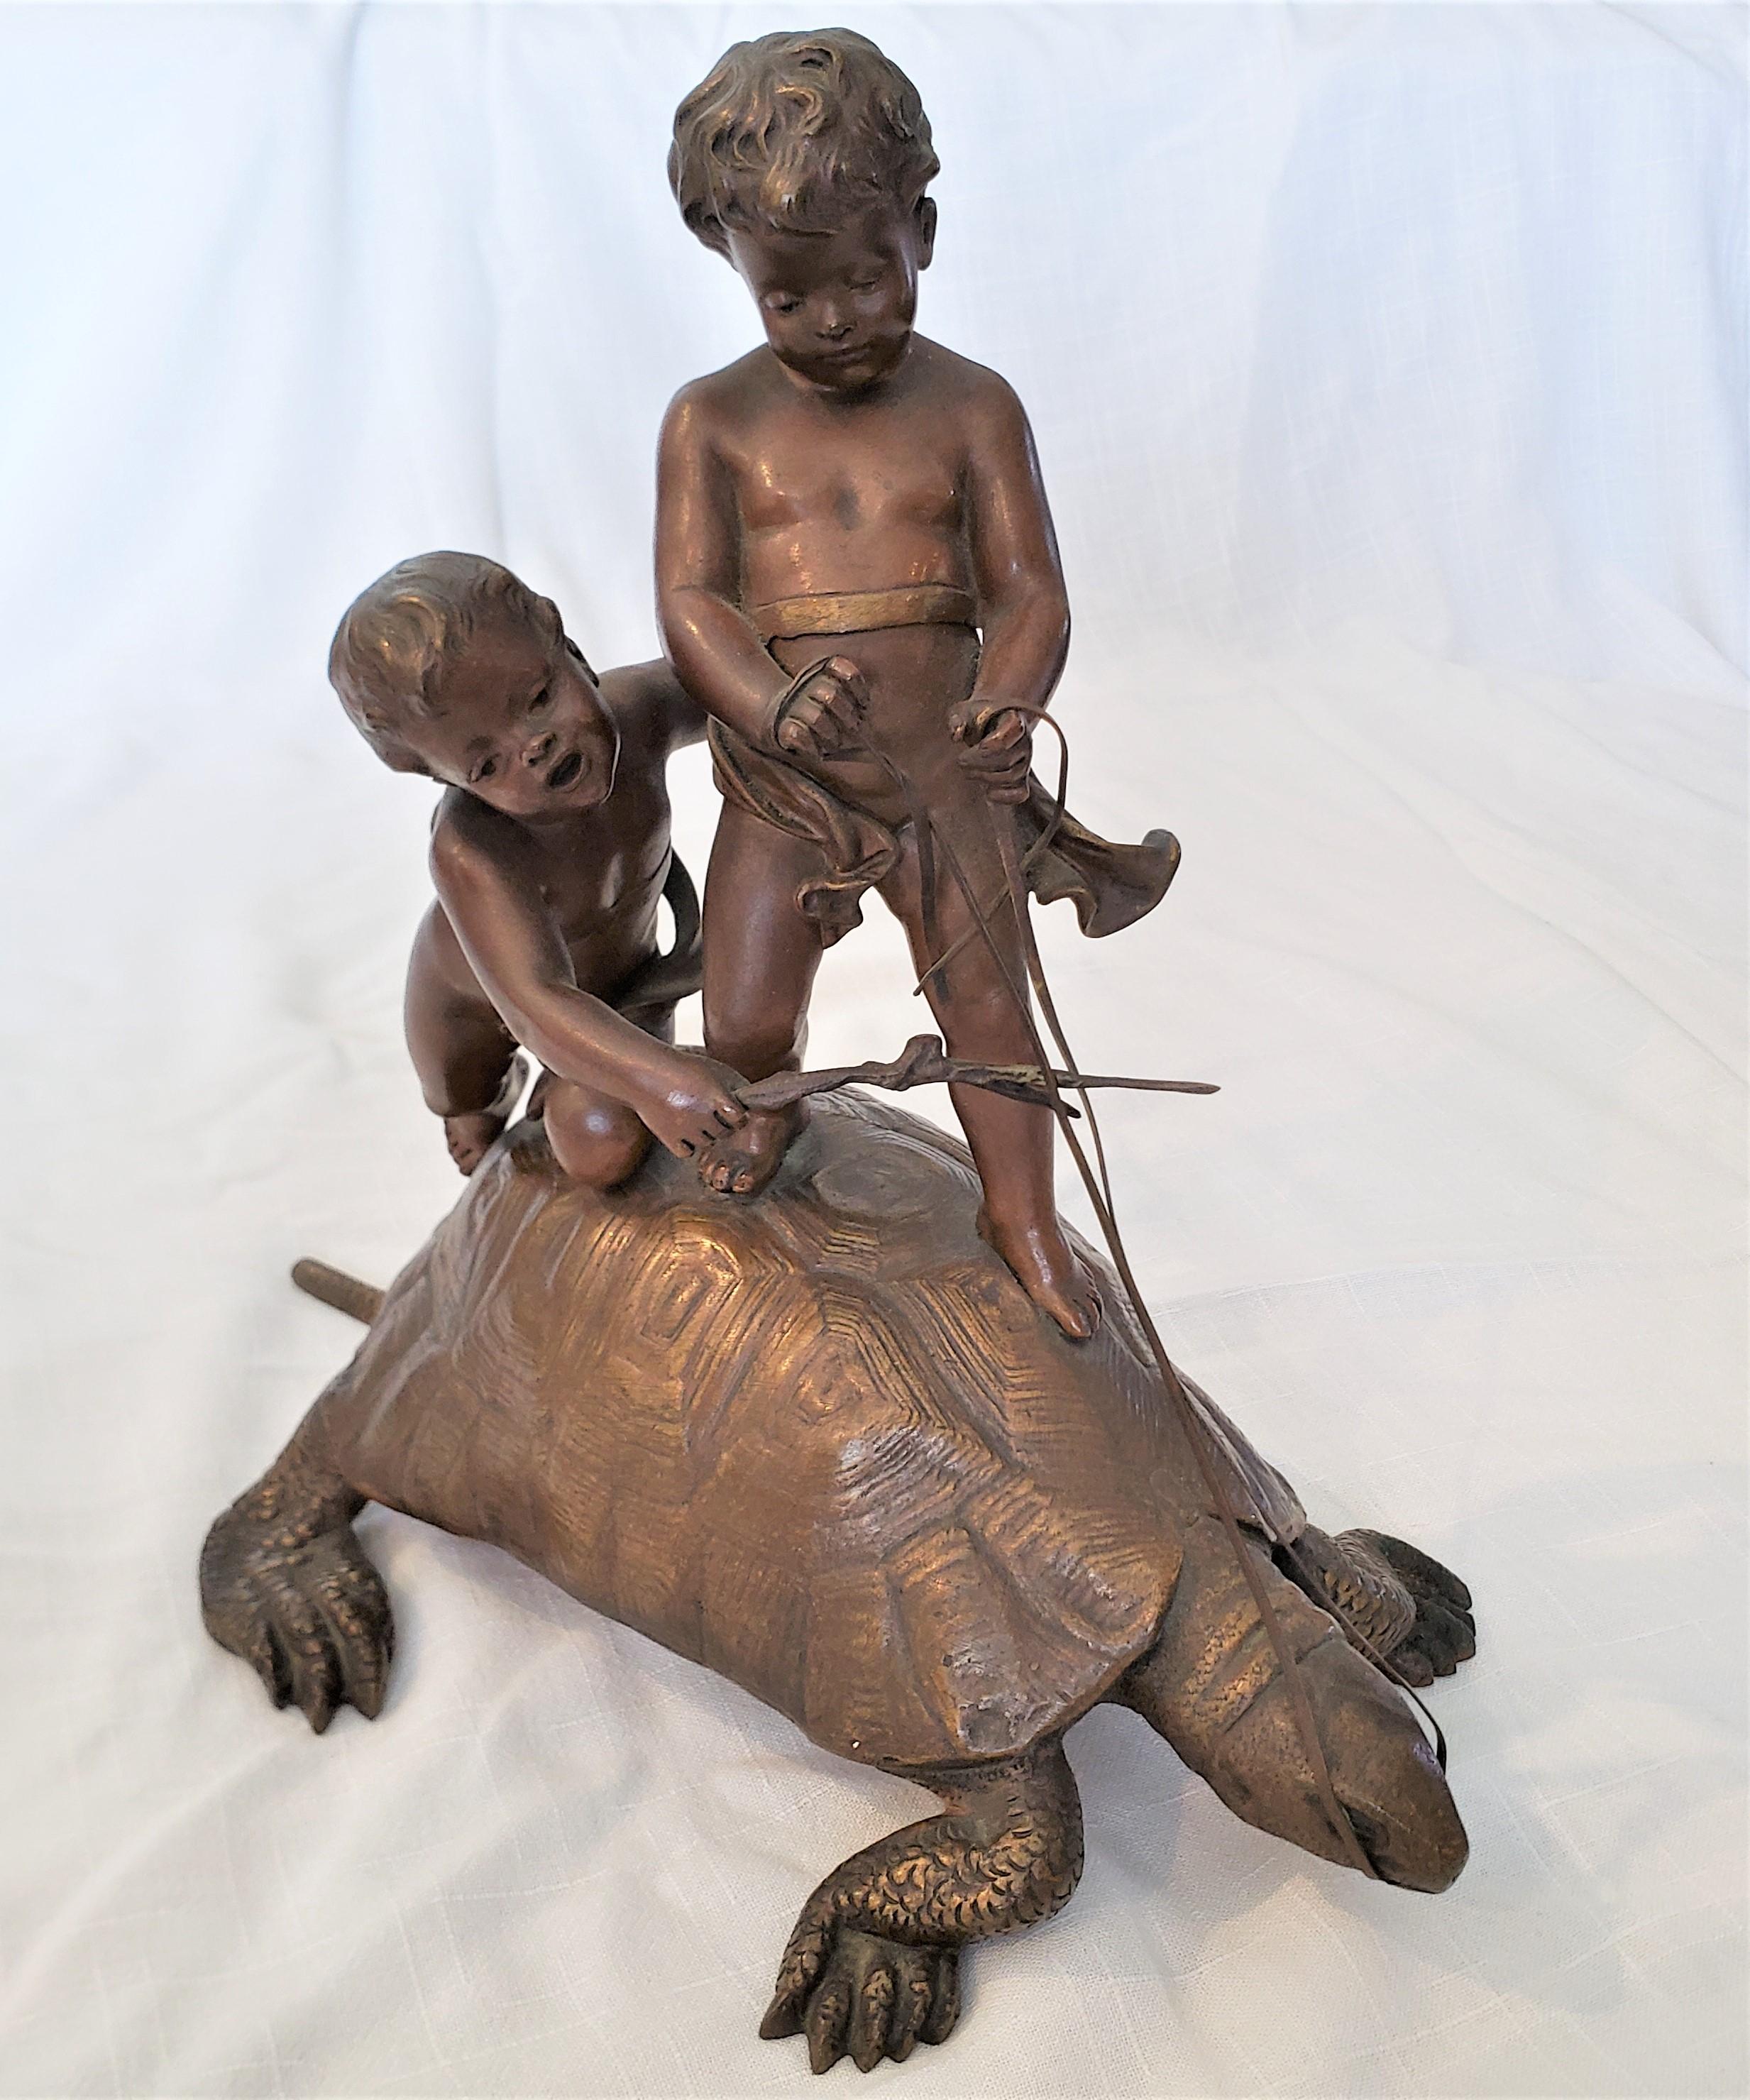 Cast Eutrope Bouret Signed Antique French Bronze Sculpture of Boys Riding a Tortoise For Sale